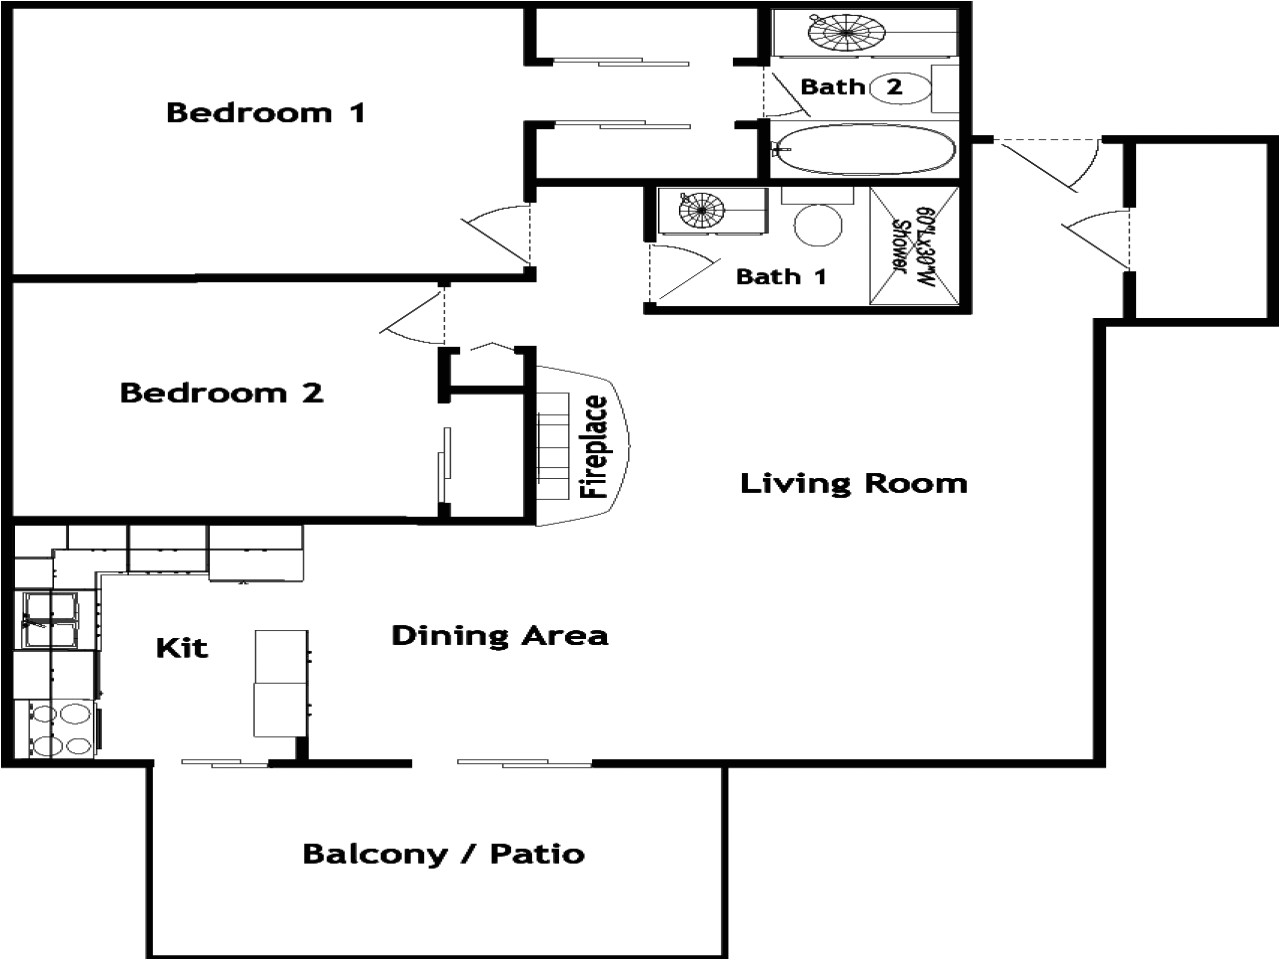 0781eb73cce046d0 2 bedroom 2 bath apartment floor plans 2 bed 2 bath house